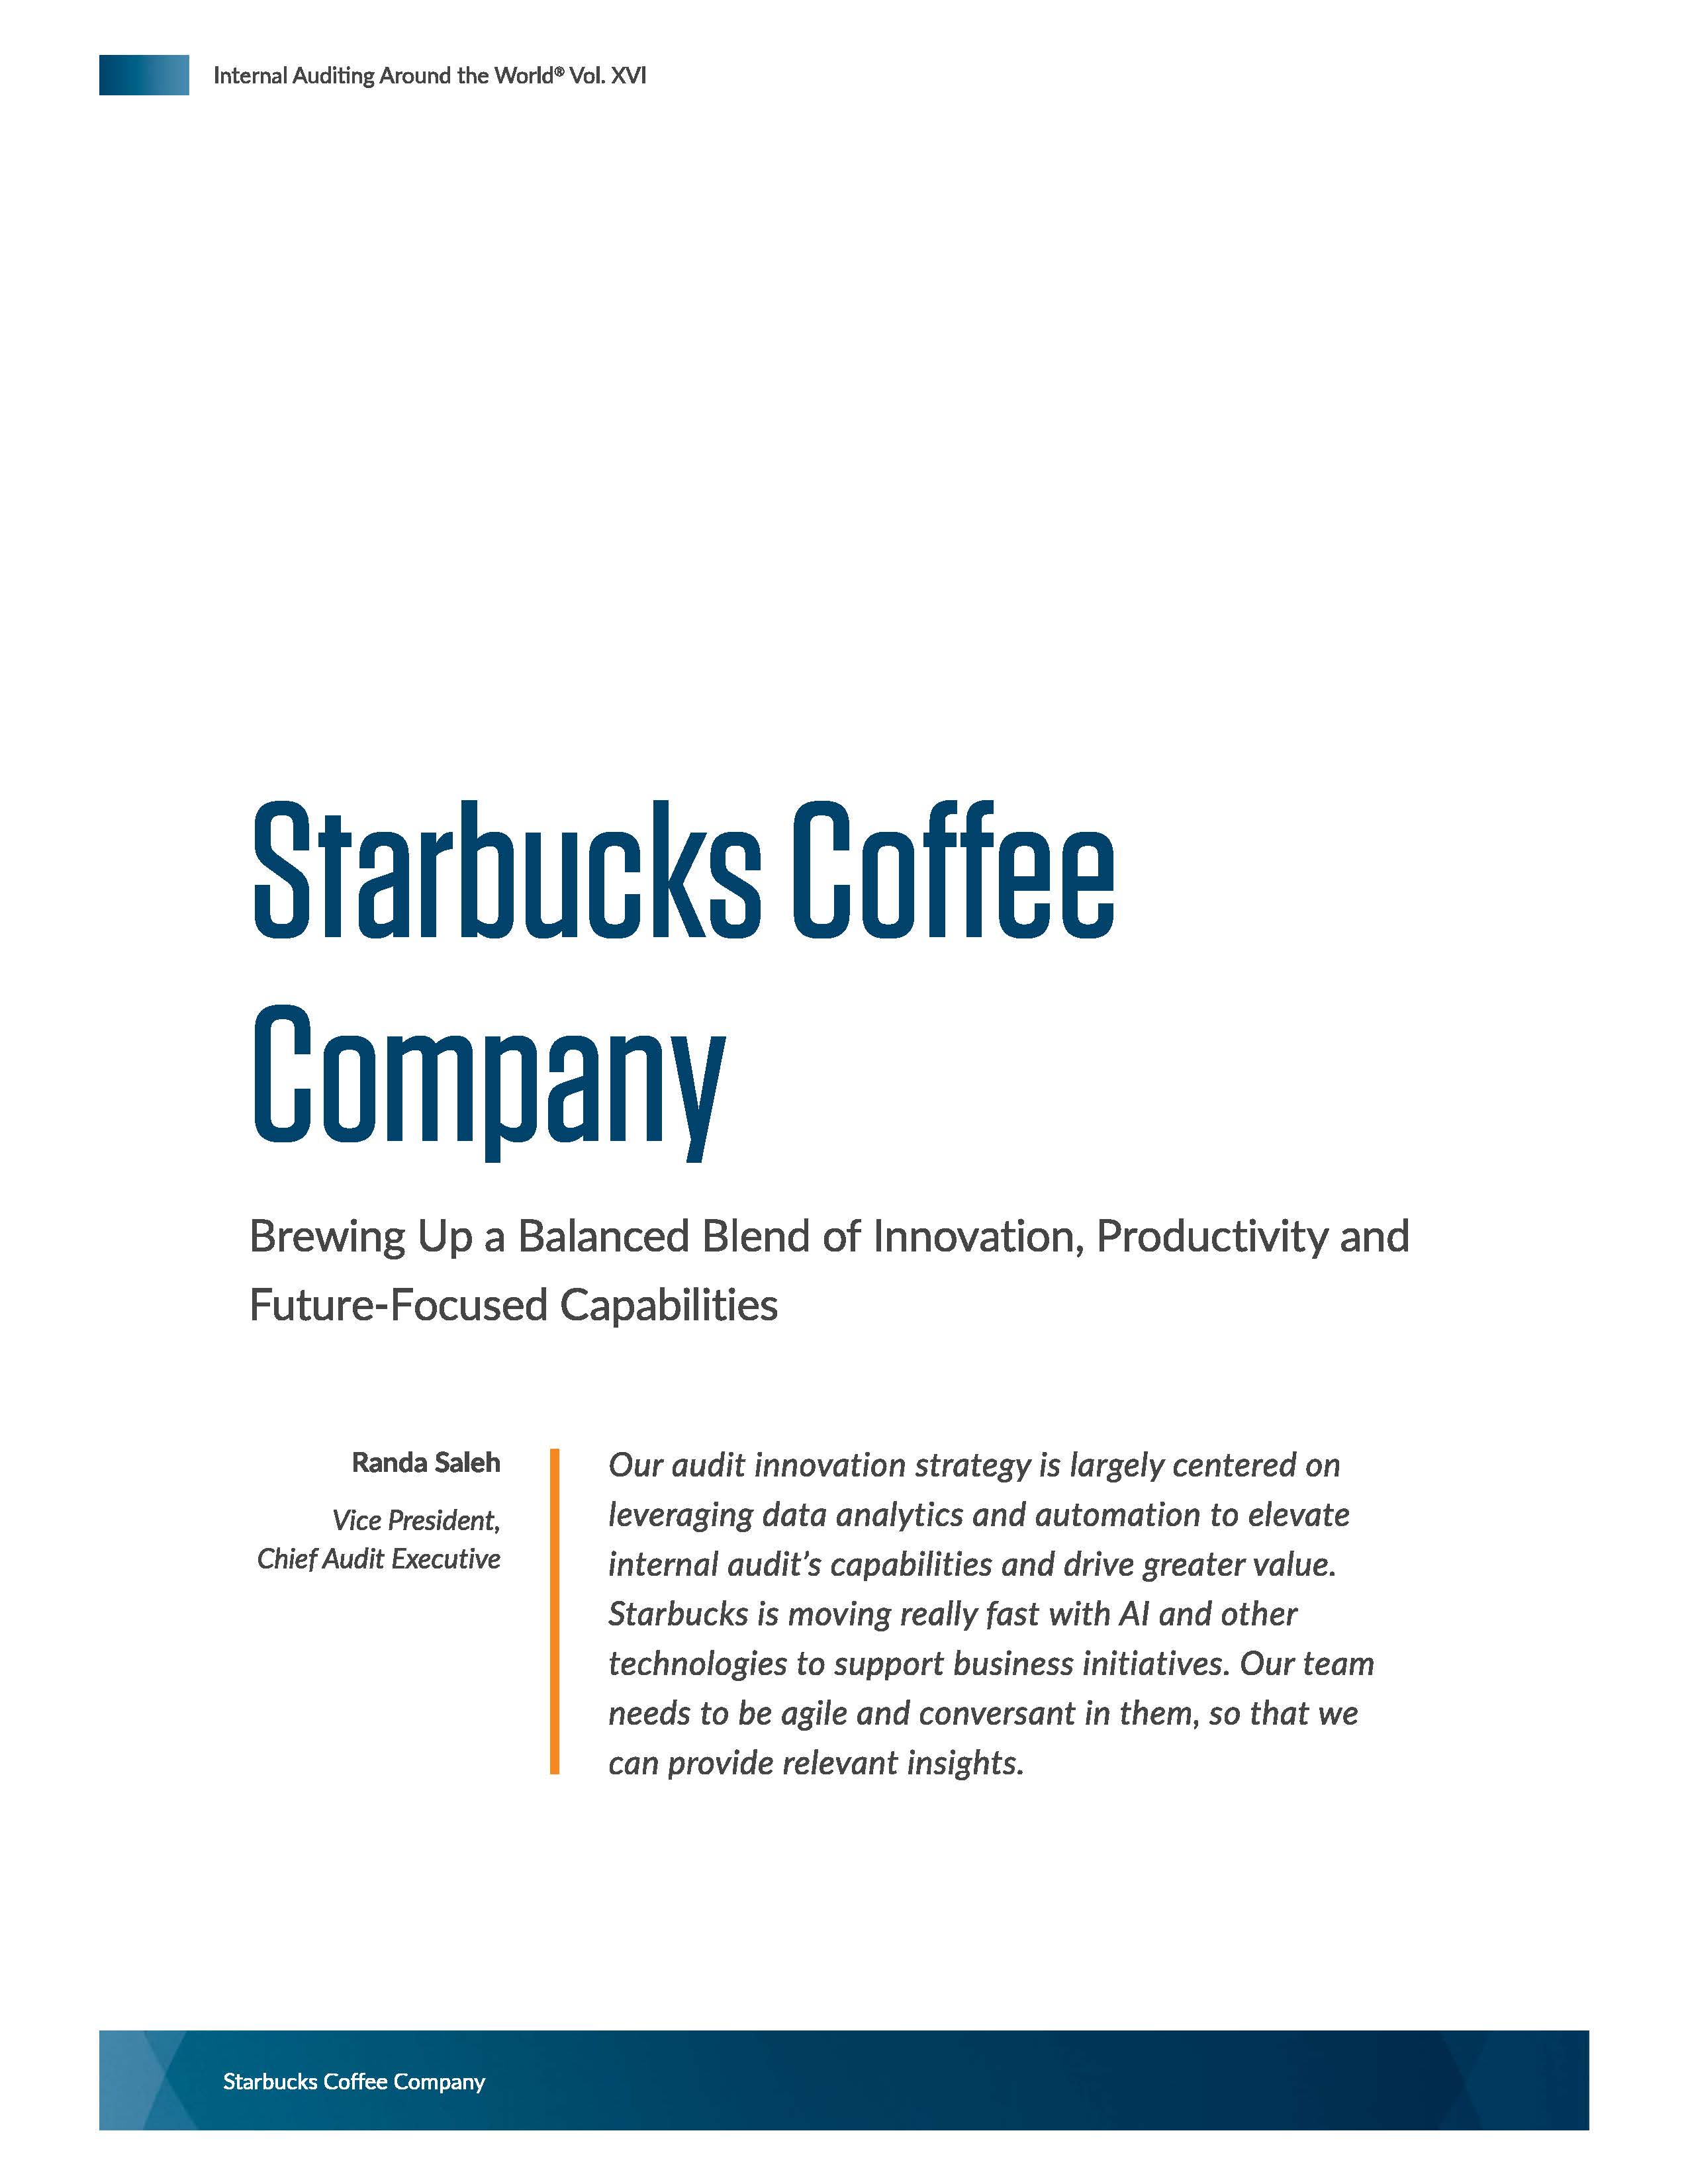 Screenshot of the first page of IAAroundWorld16 Protiviti Starbucks